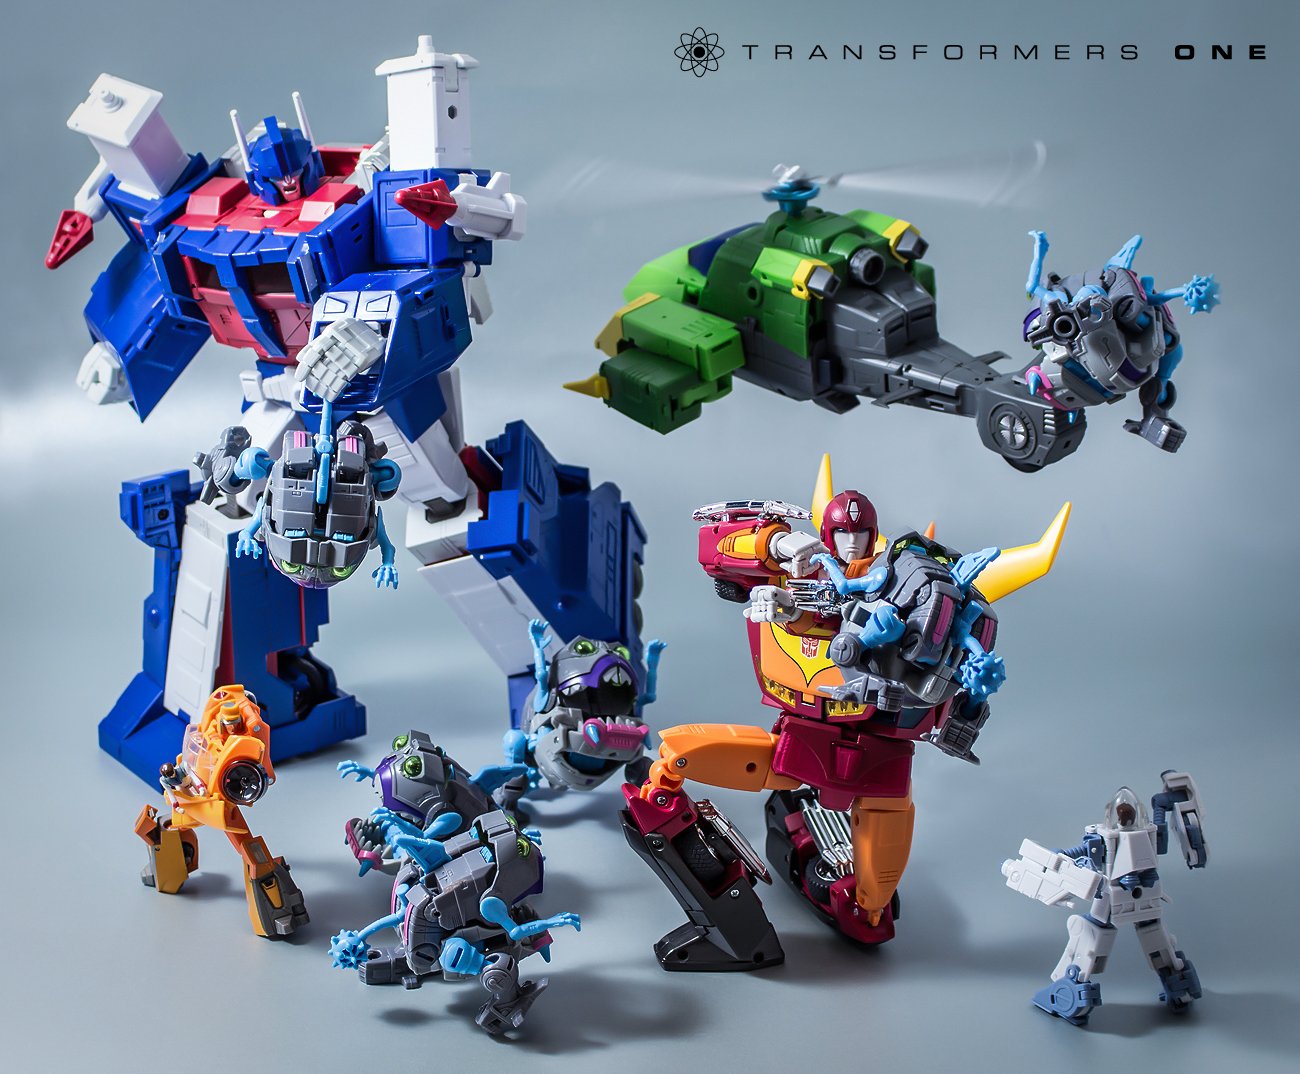 Maz-tf-square-one-transformers